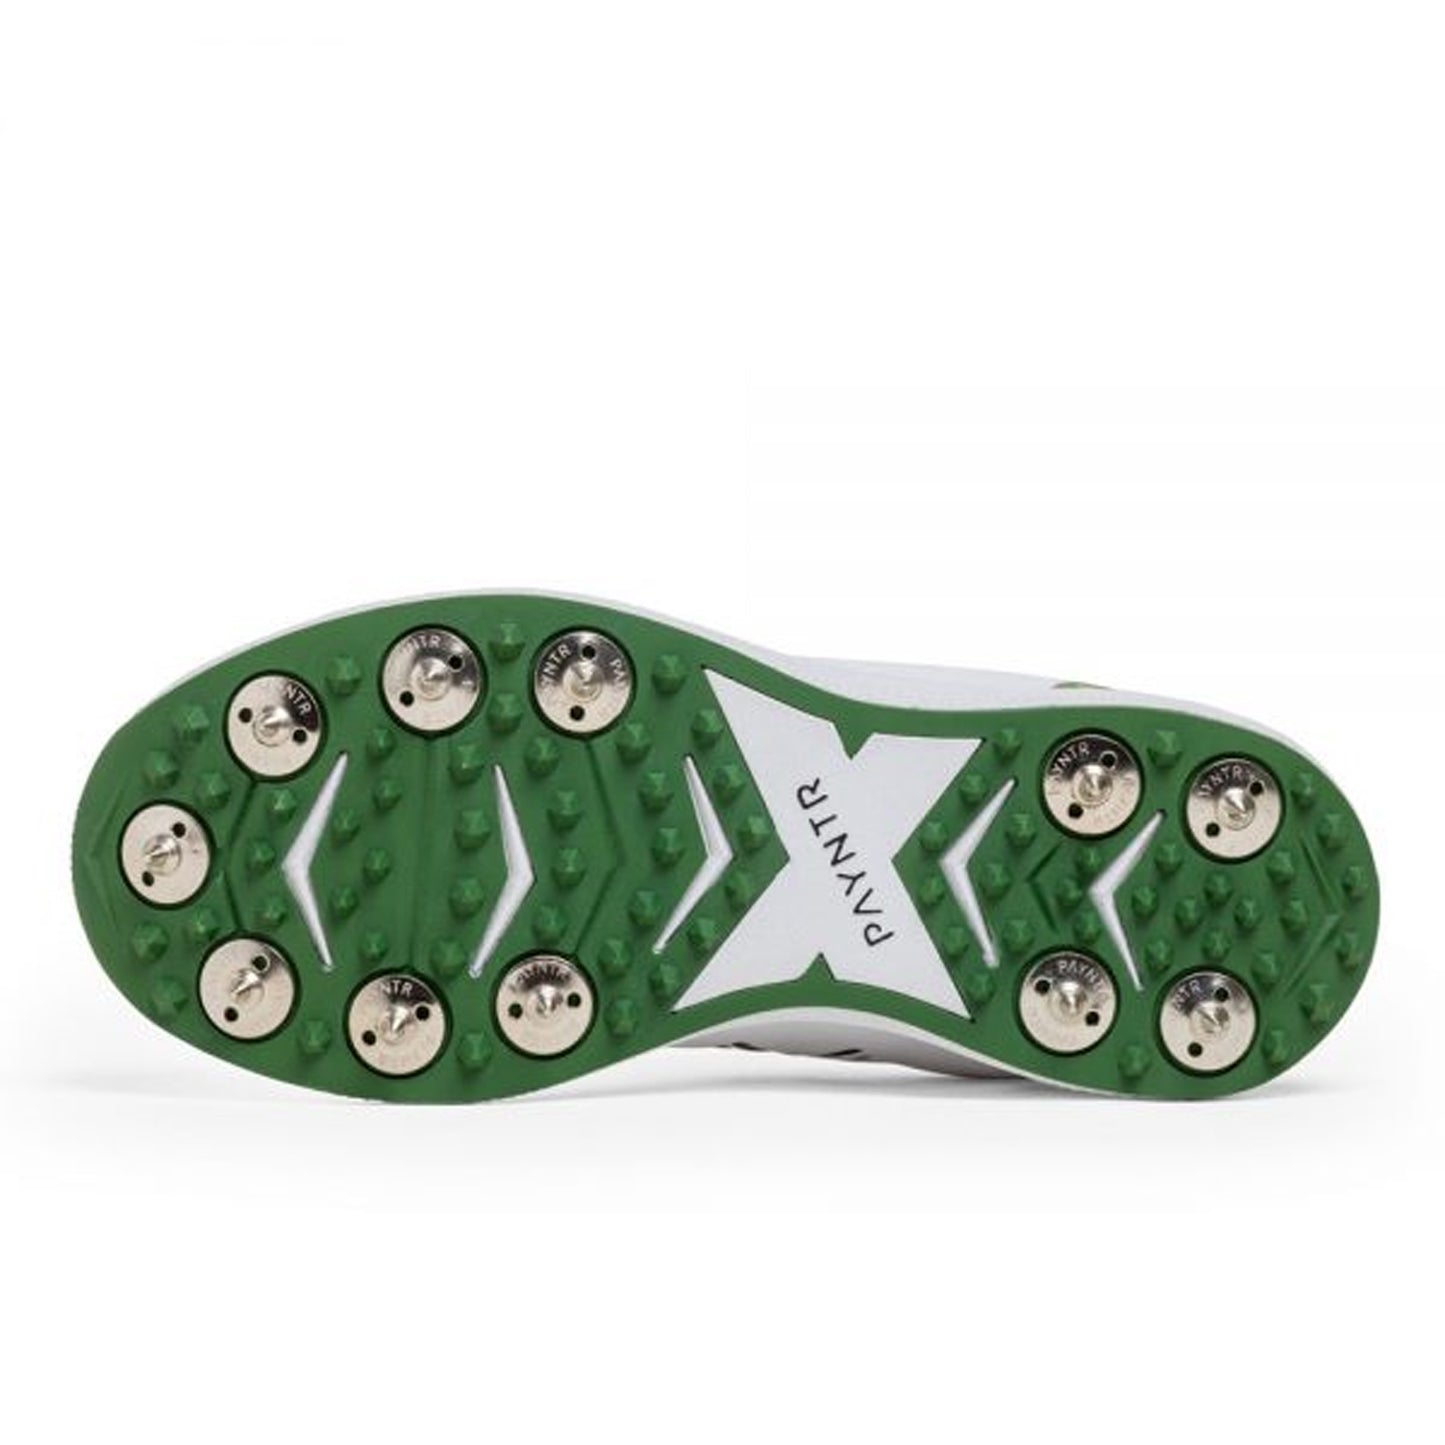 Payntr X Batting Metal Spike Cricket Shoes Camo - Best Price online Prokicksports.com